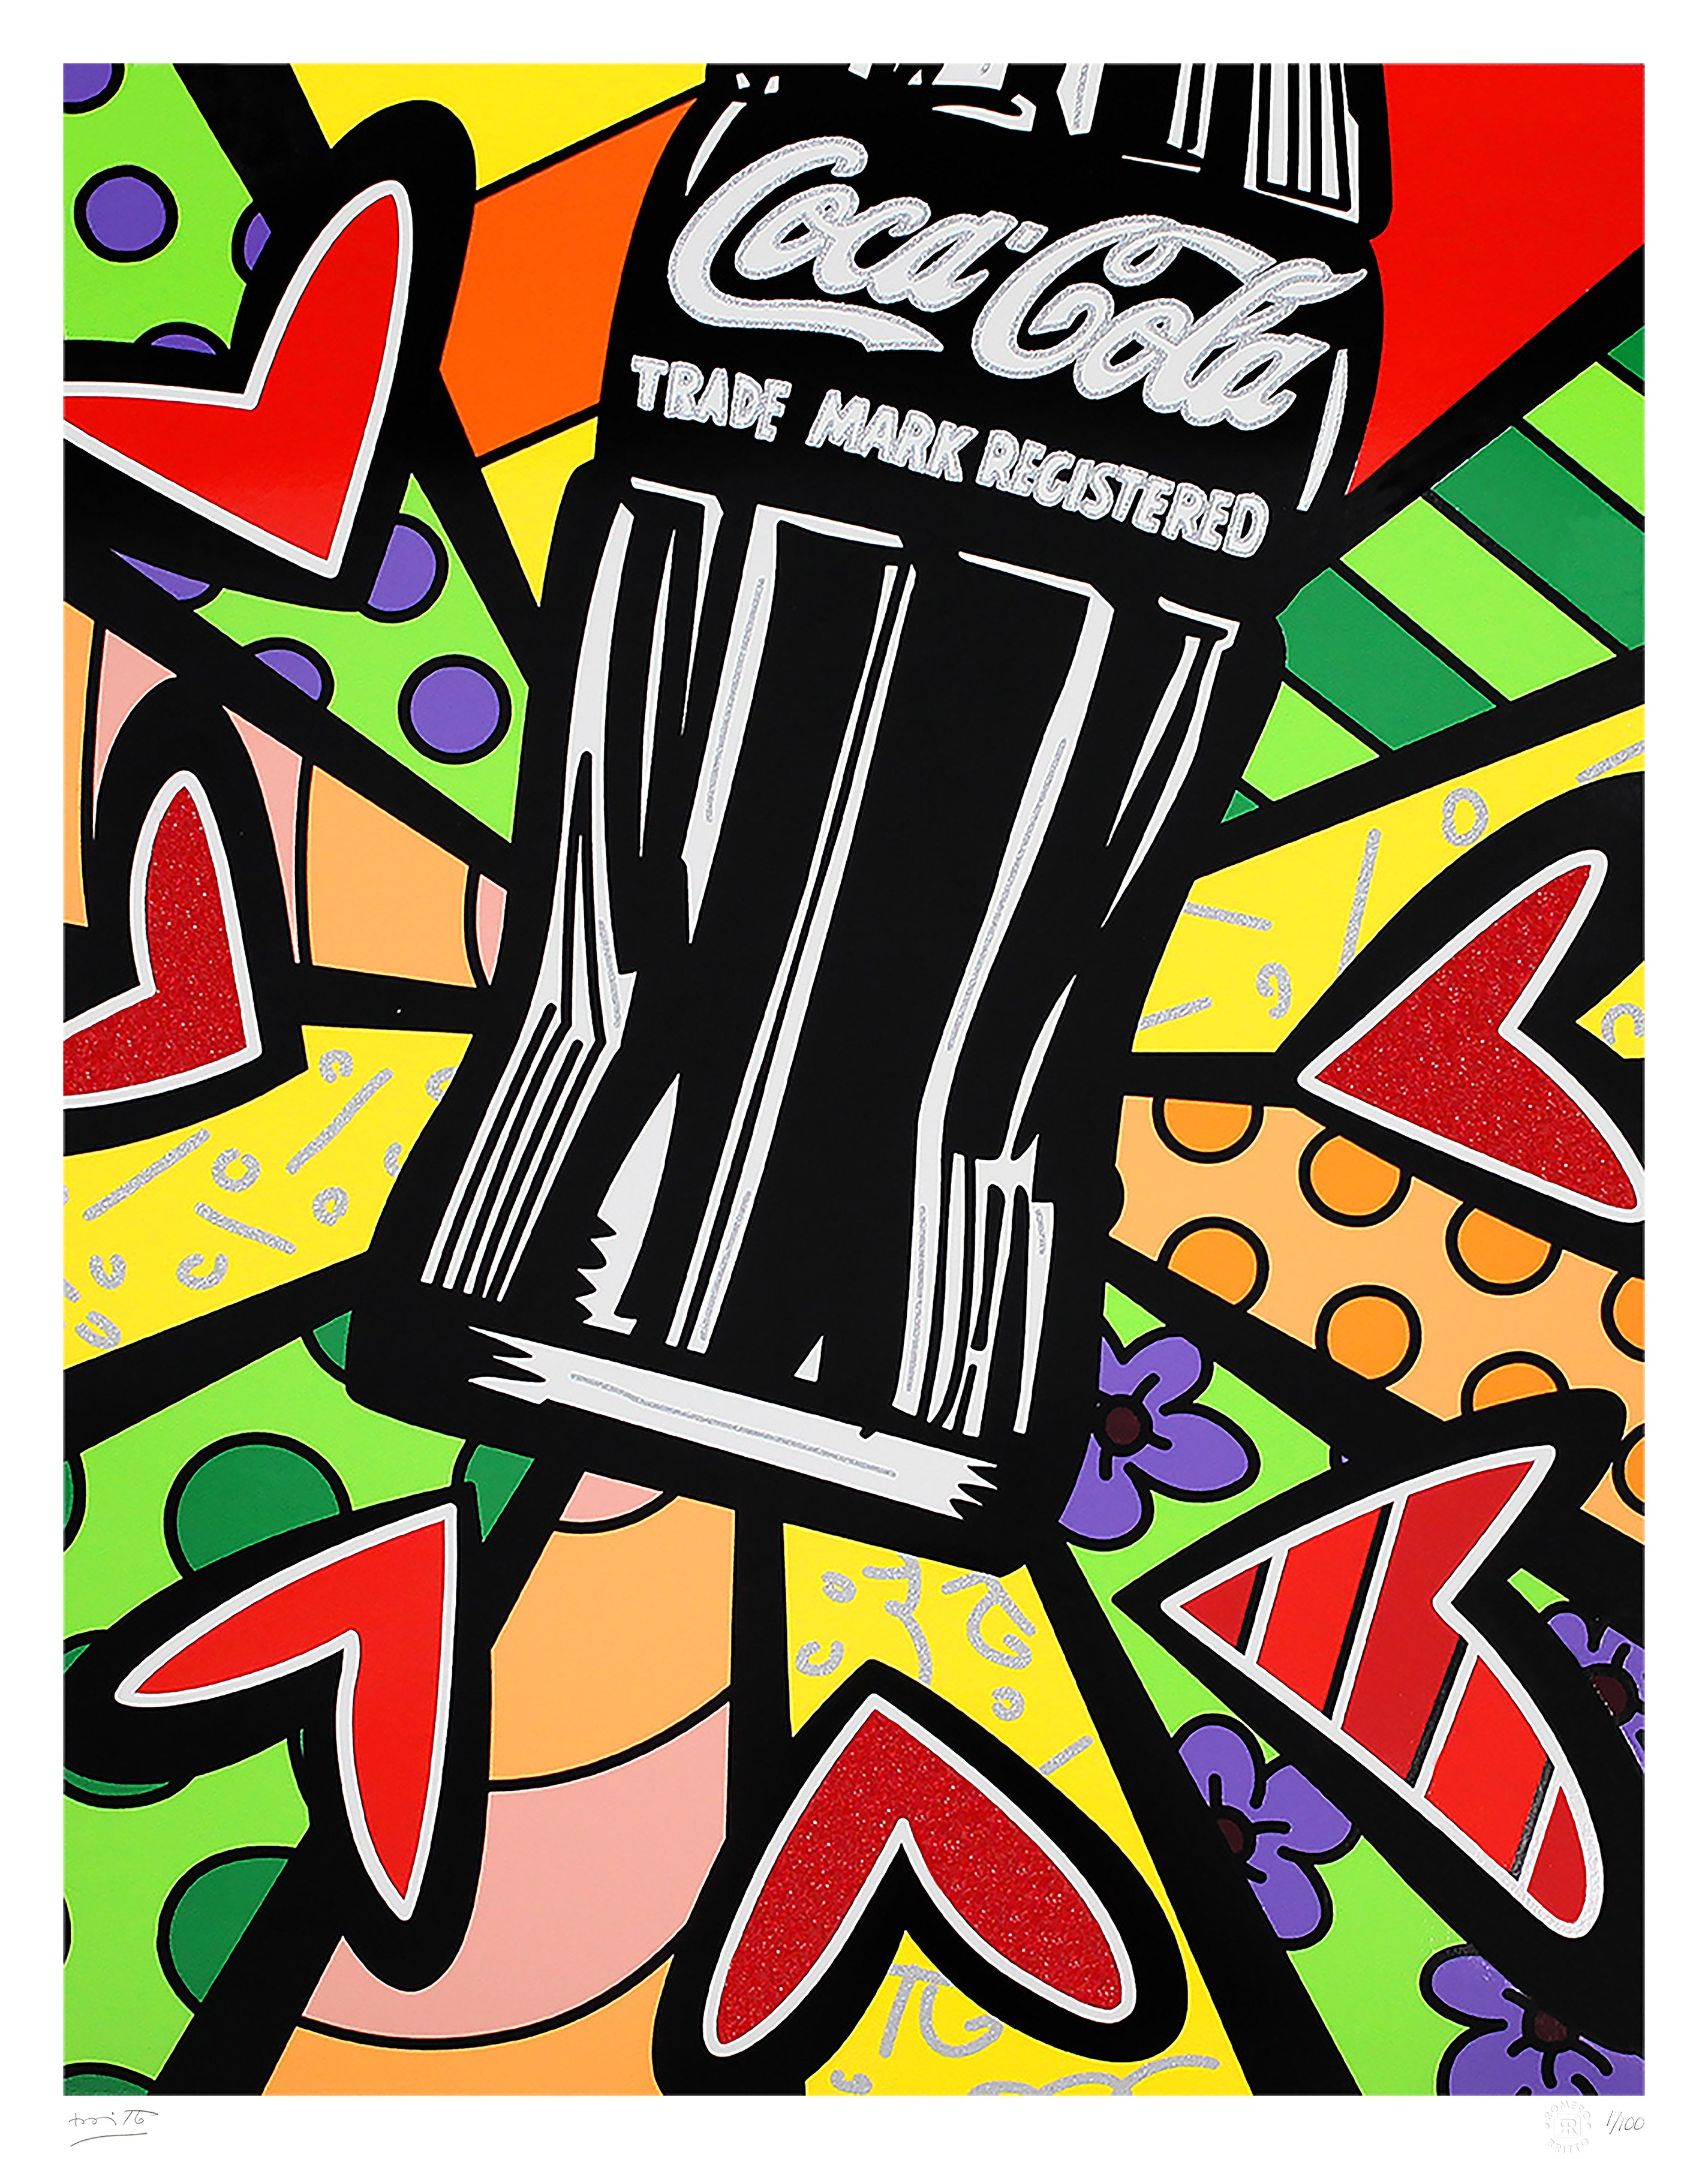 coca cola drawing